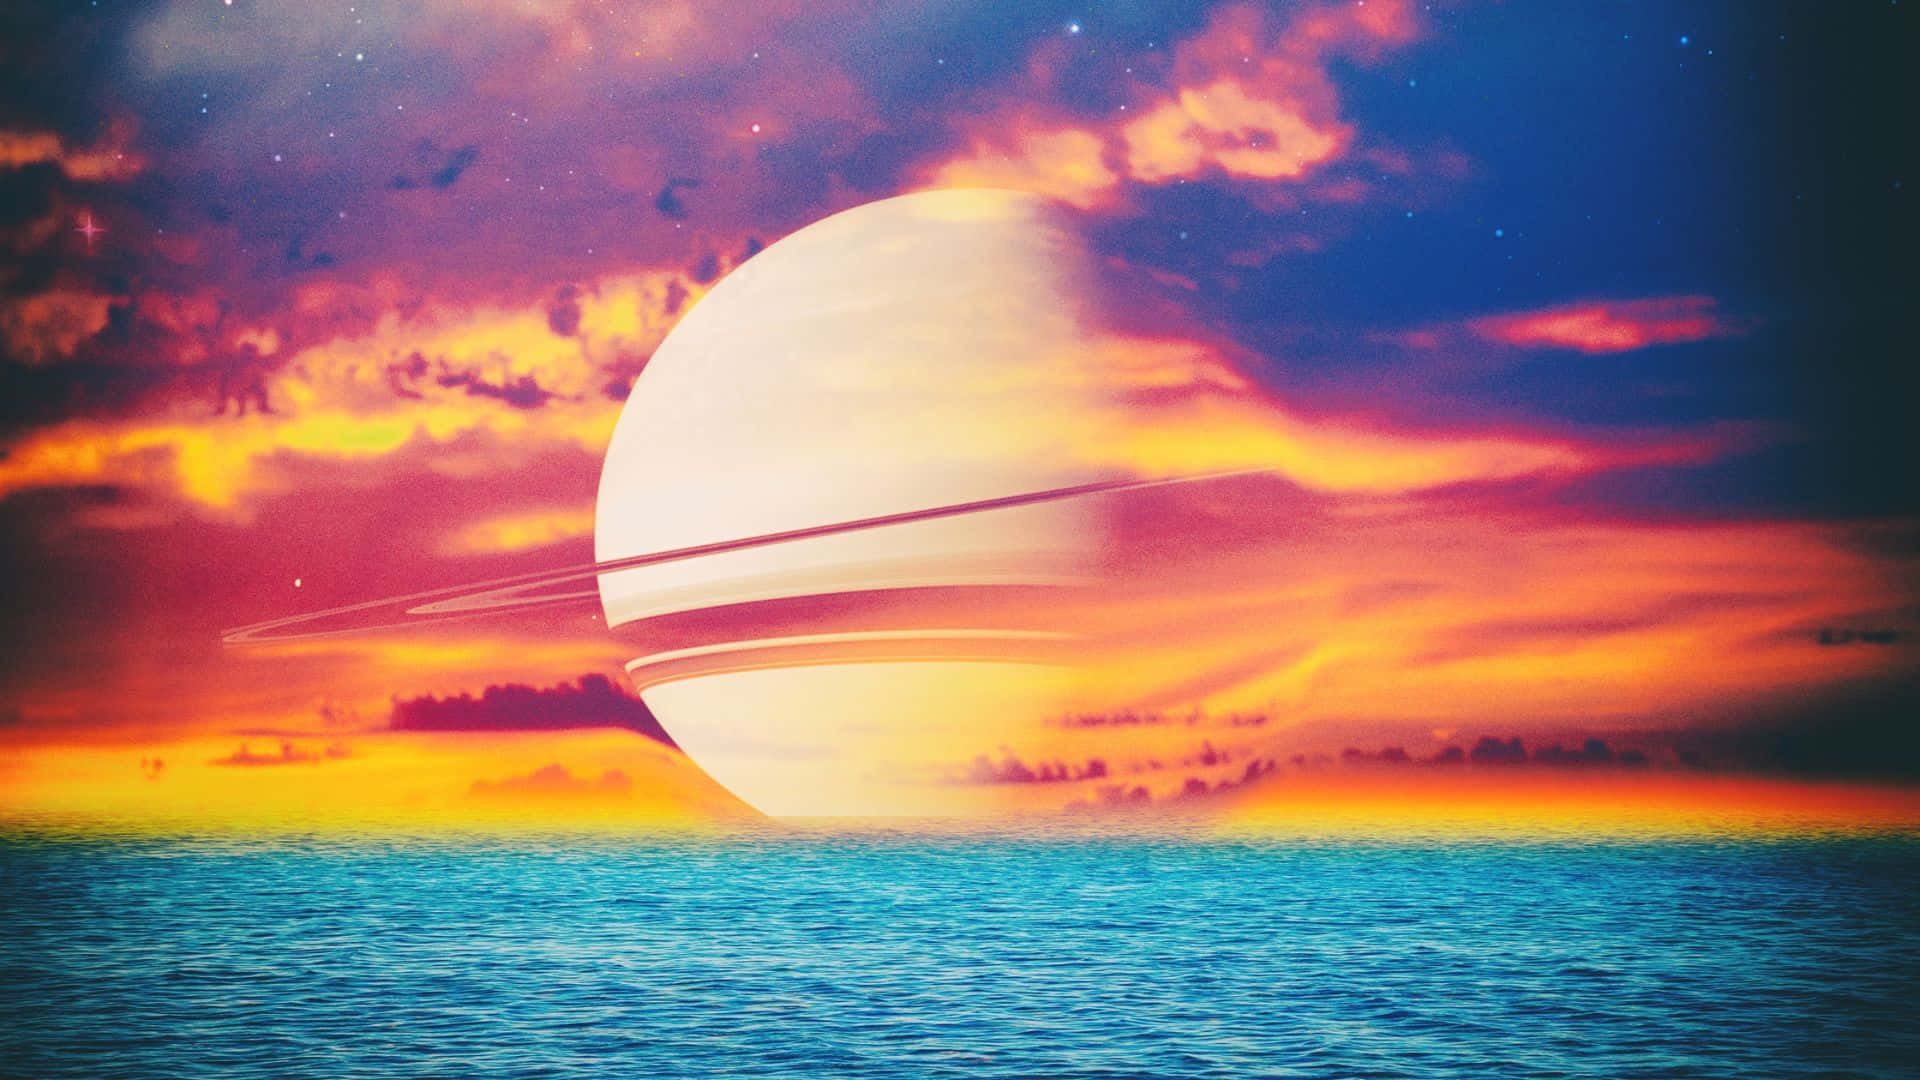 Saturn Ocean Sunset Wallpaper